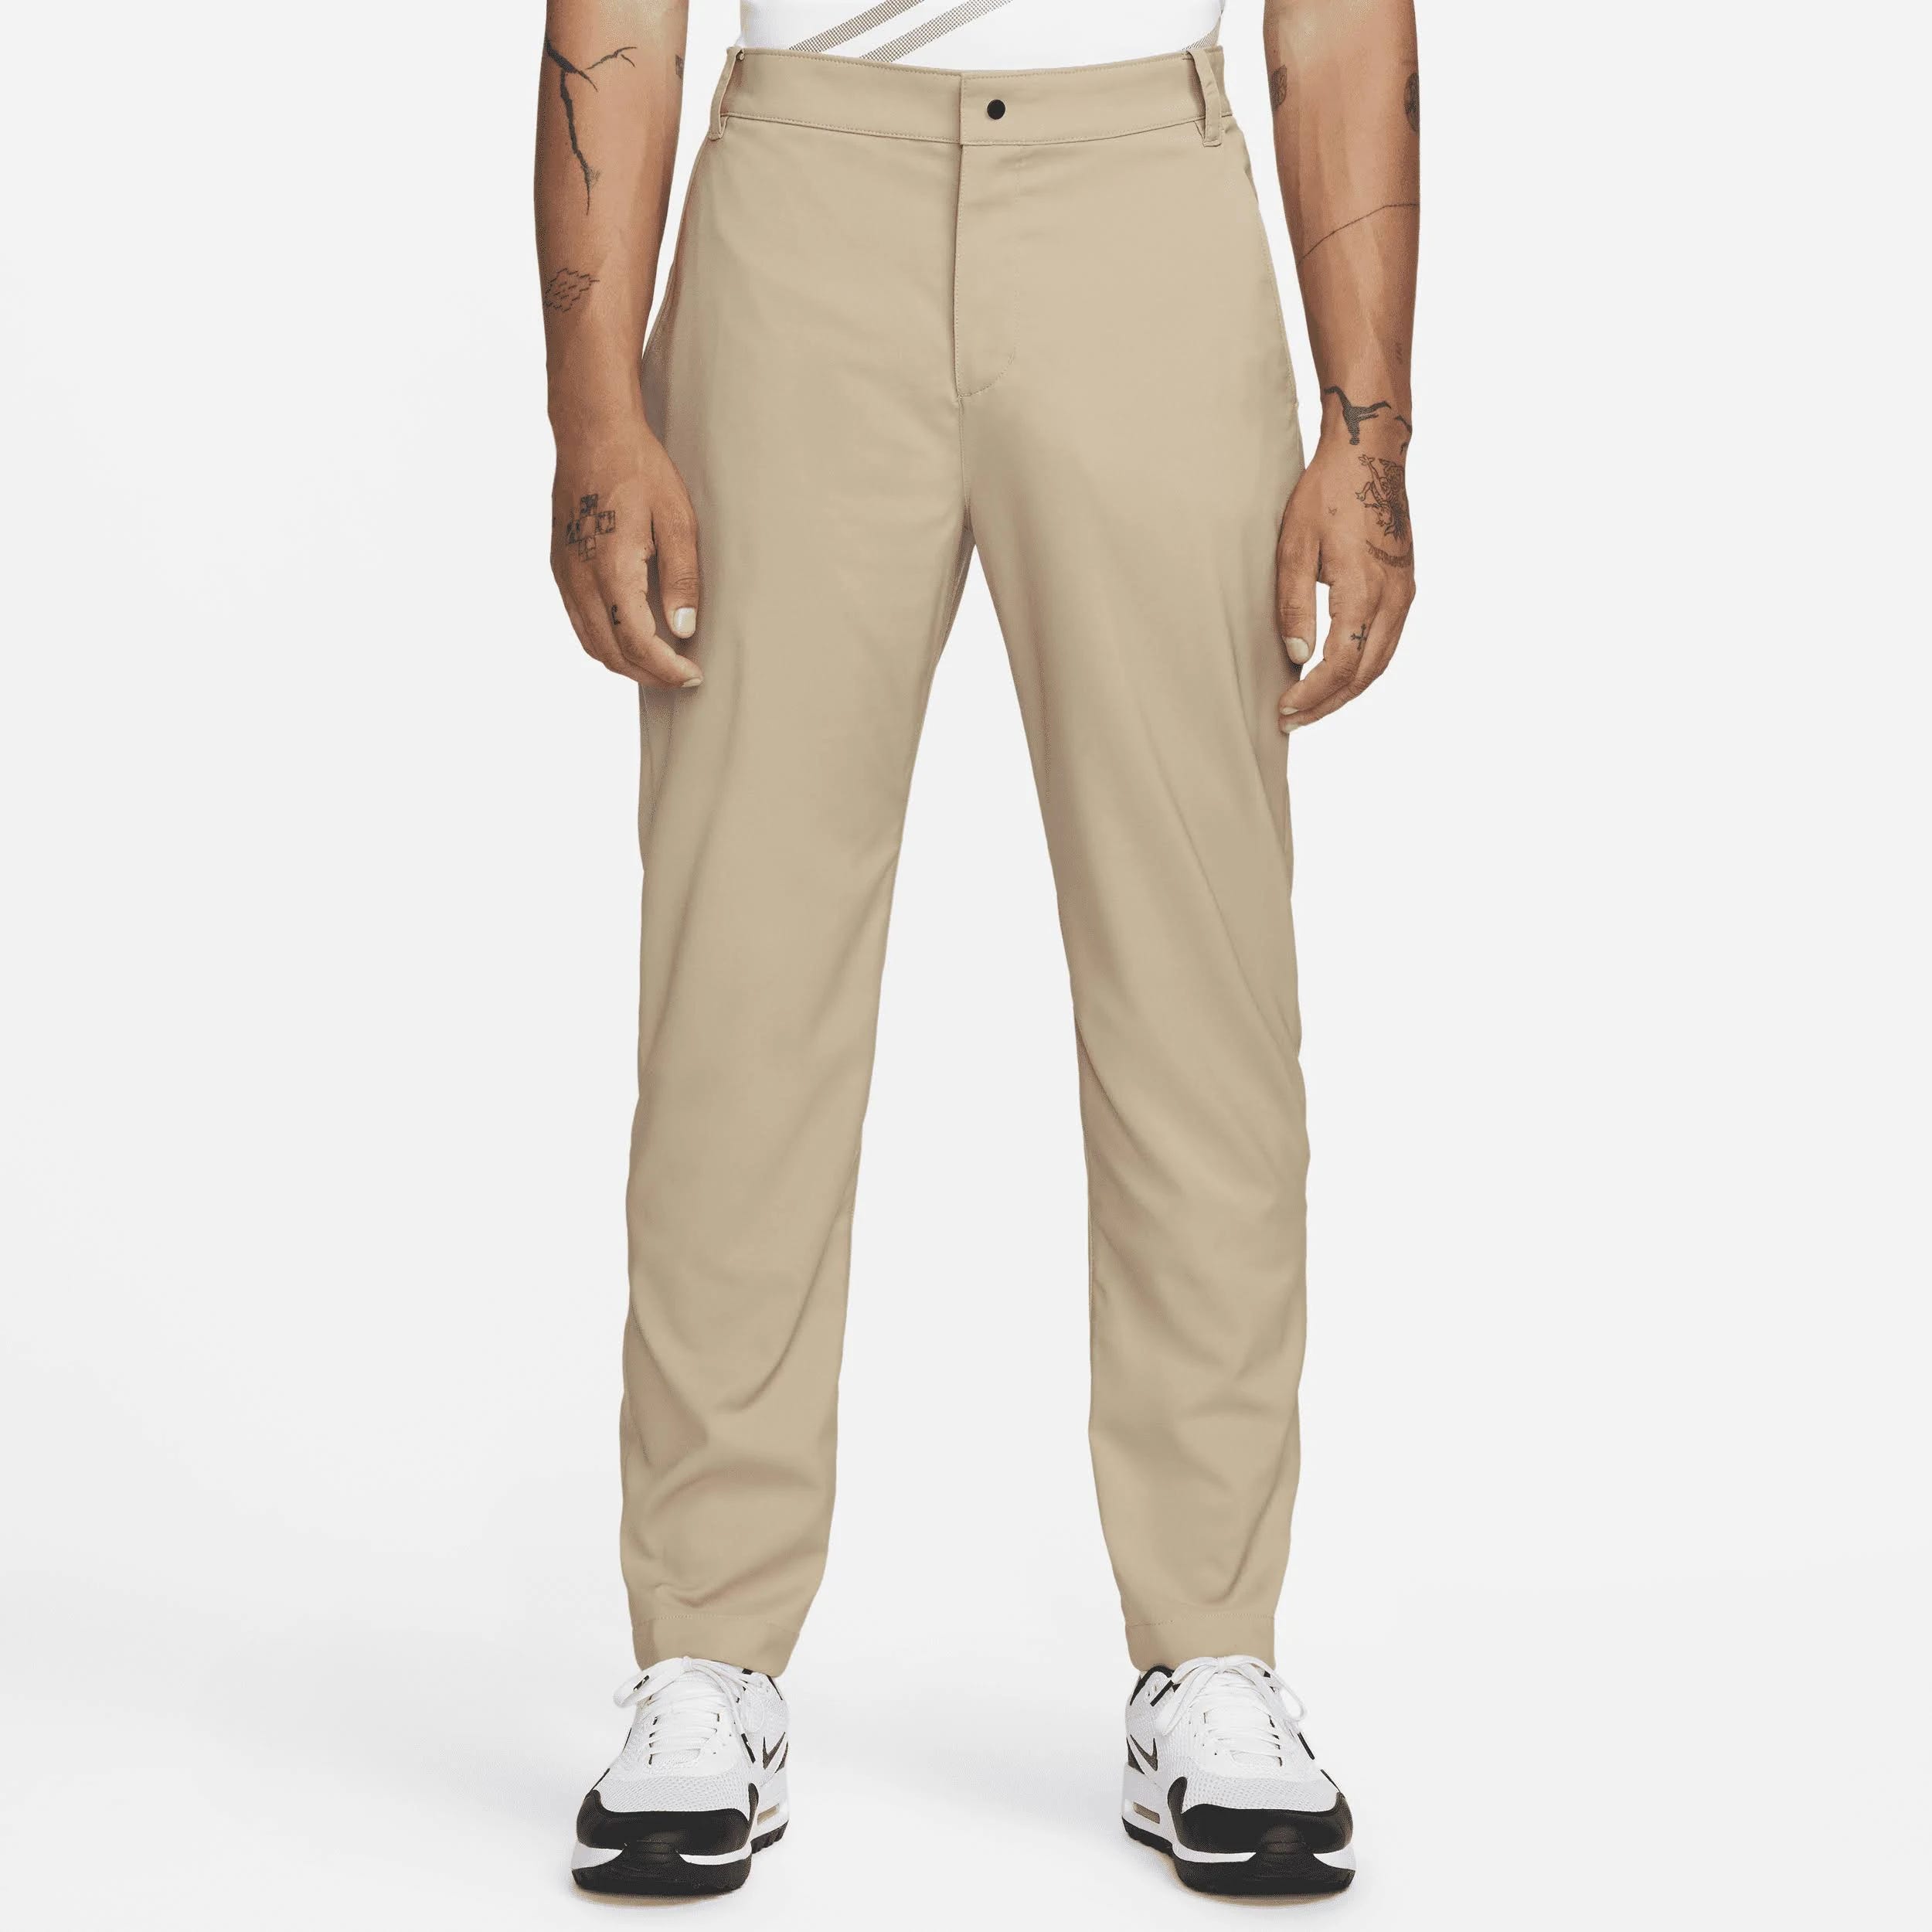 Sweat-Resistant Nike Golf Pants for Ultimate Comfort | Image